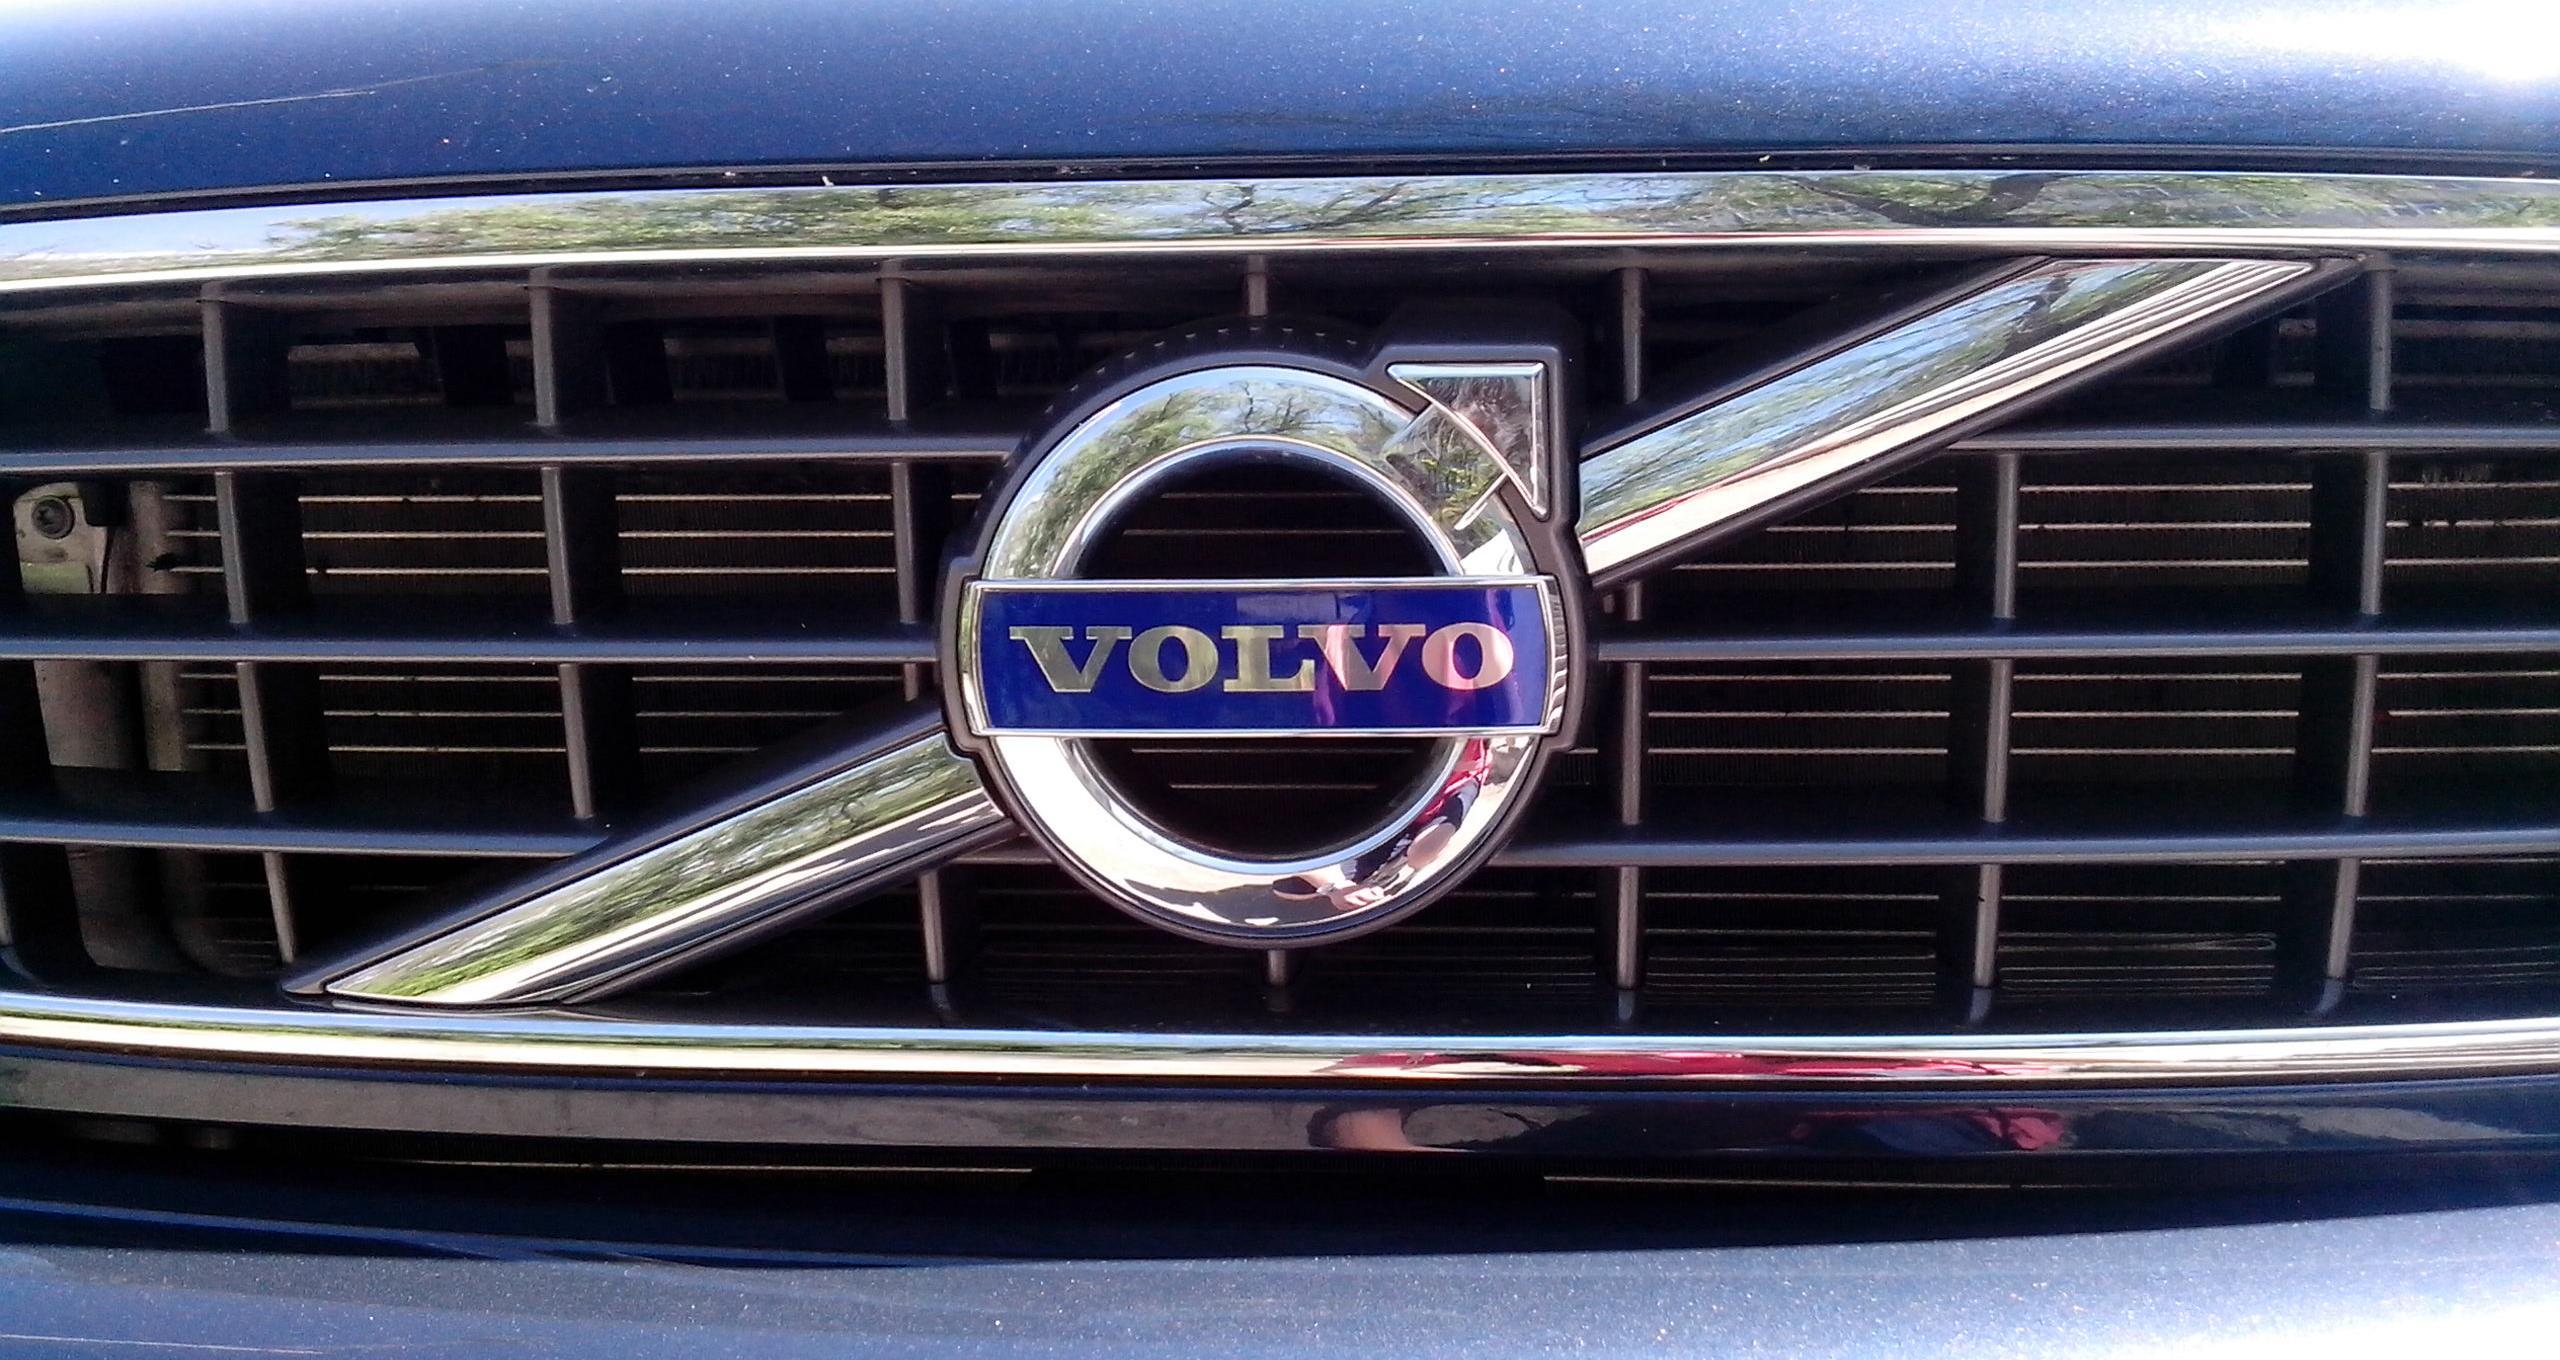 2018 Volvo Grill Logo - Volvo Logo, Volvo Car Symbol Meaning and History. Car Brand Names.com